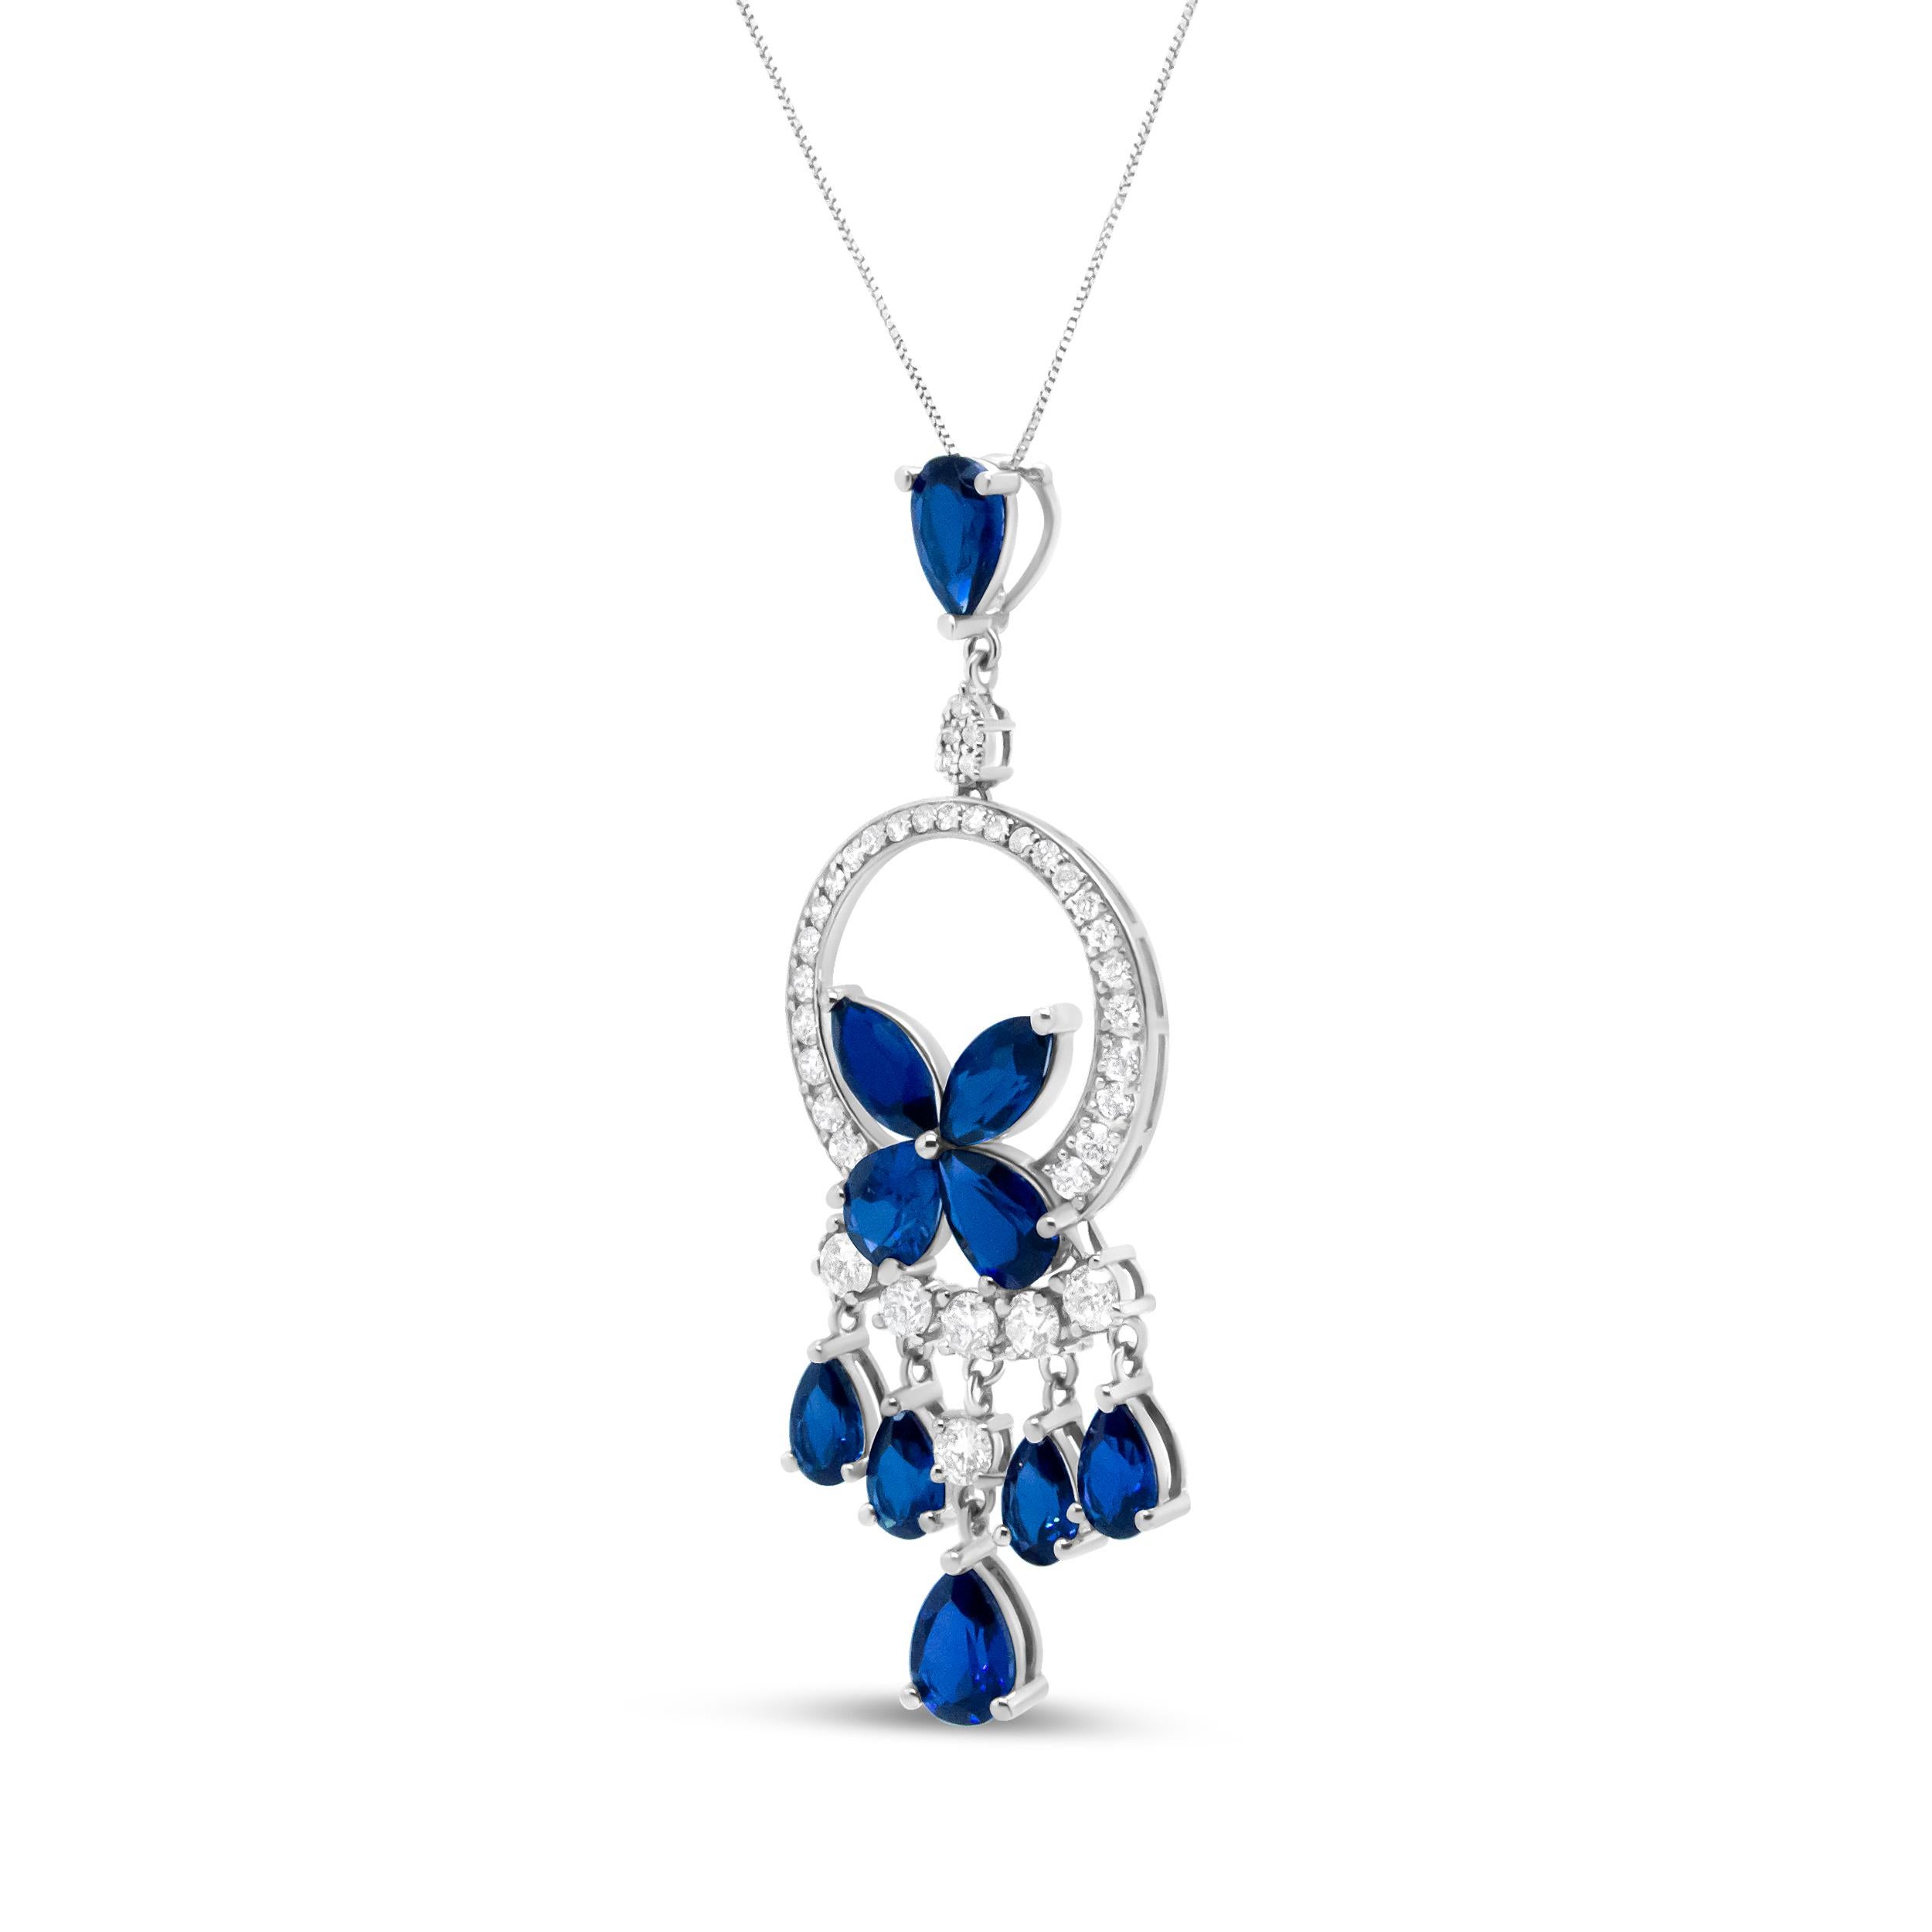 Contemporary 18K White Gold 1.0ct Diamond & Blue Sapphire Chandelier Cascade Pendant Necklace